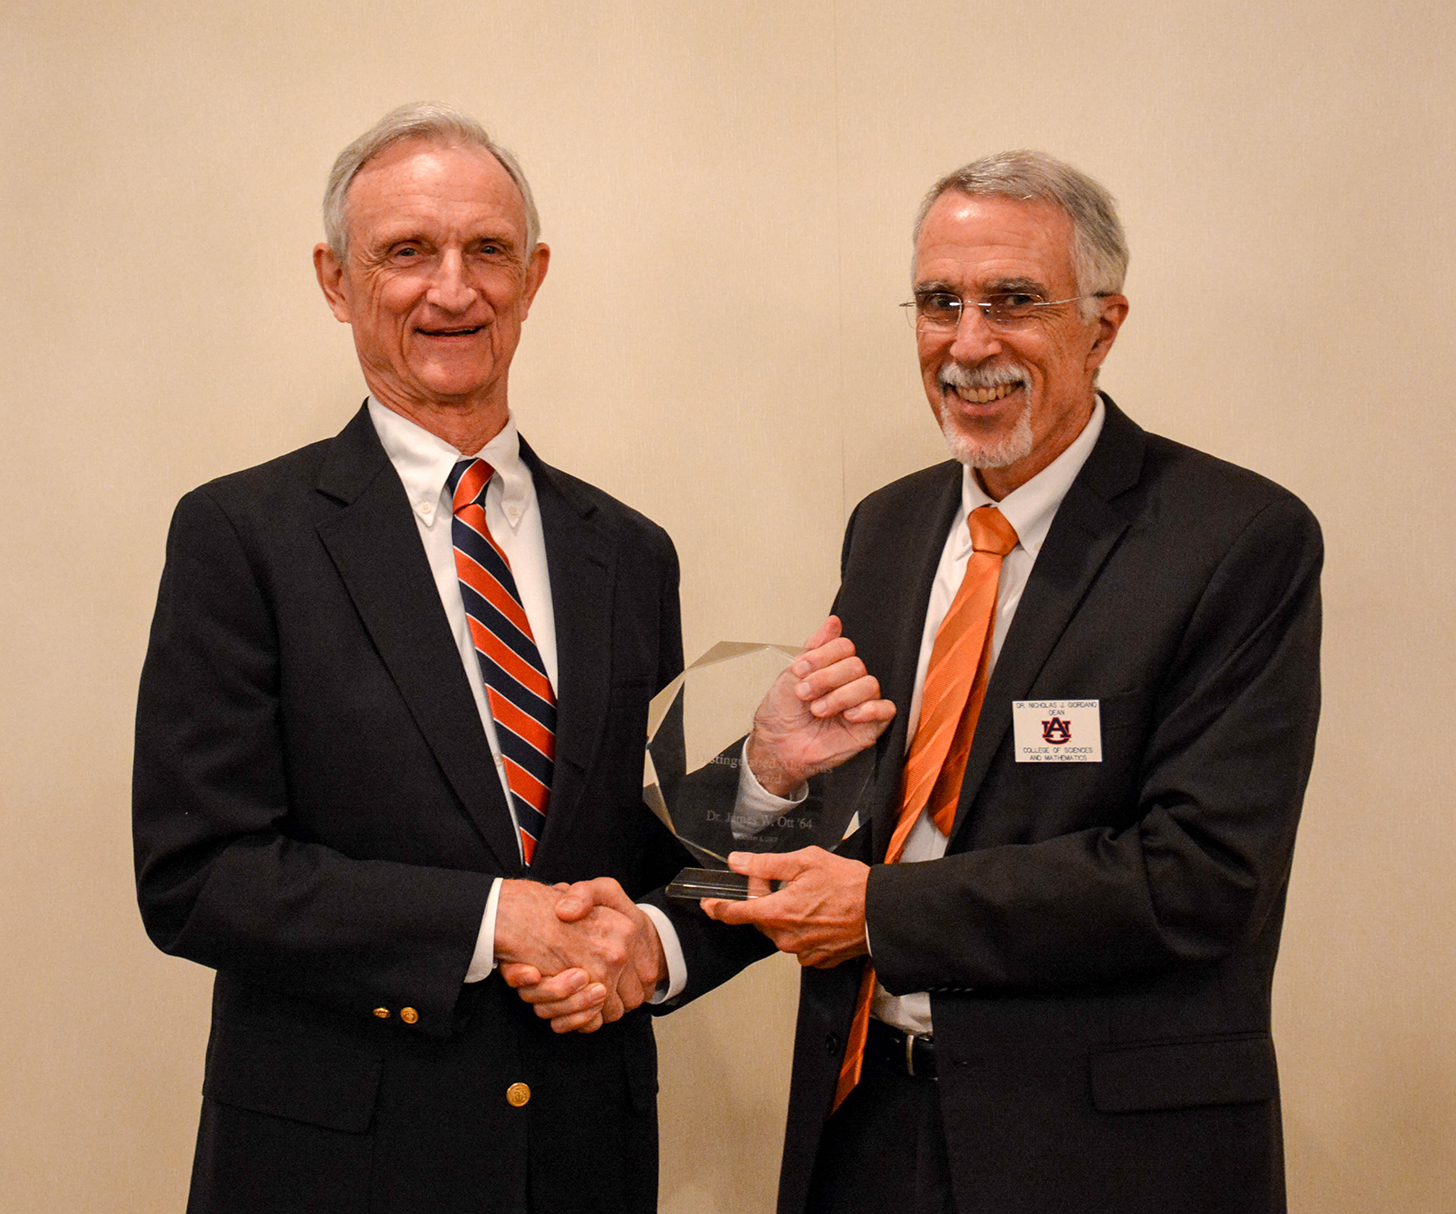 James Ott receiving the COSAM Distinguished Alumnus award from Dean Nicholas Giordano